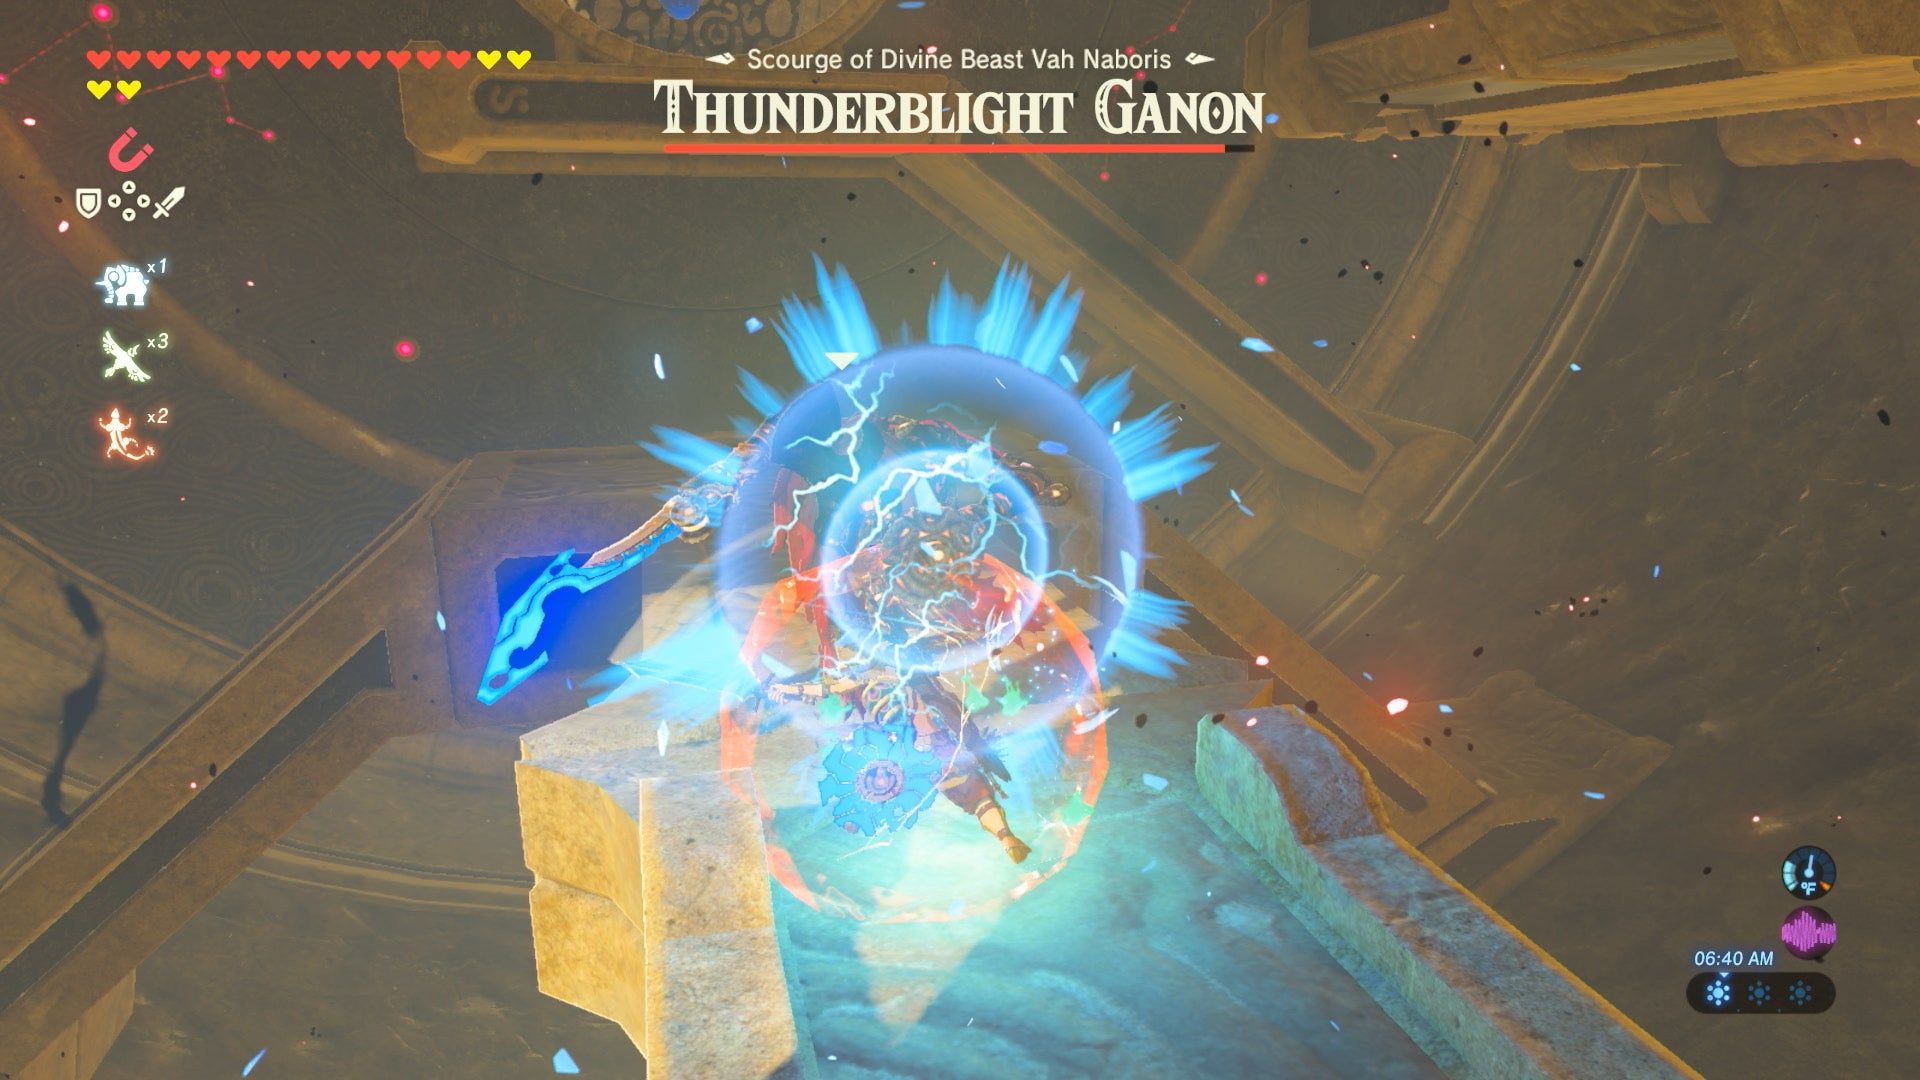 Thunderblight Ganon Legend of Zelda: Breath of the Wild Wiki Guide